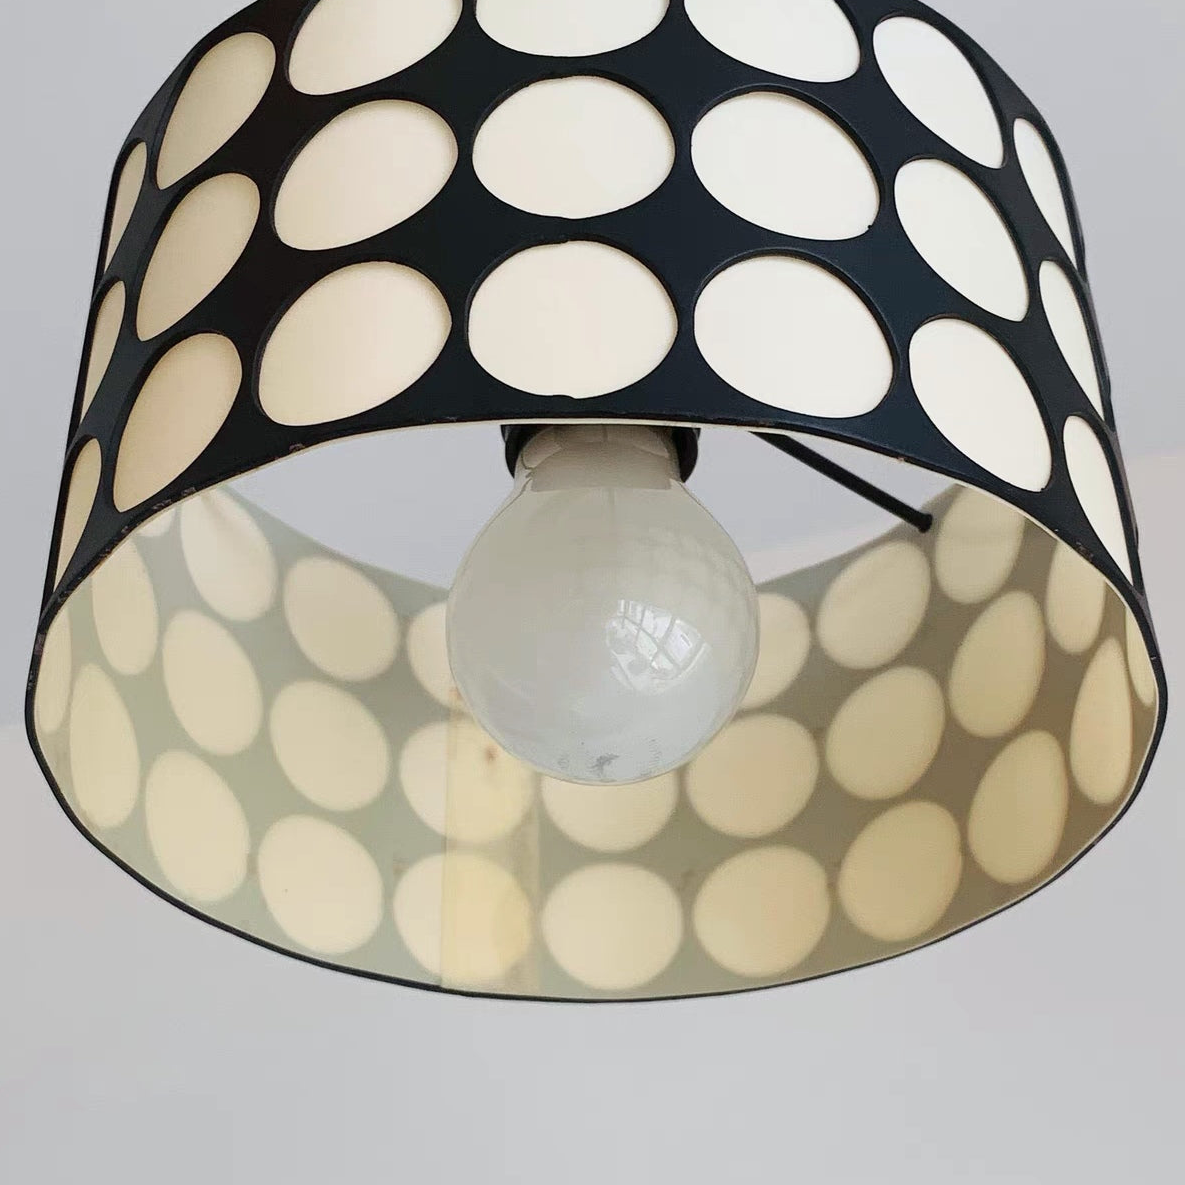 Hailie Retro Round LED Polka Dots Pendant Light Metal/Fabric Living Room